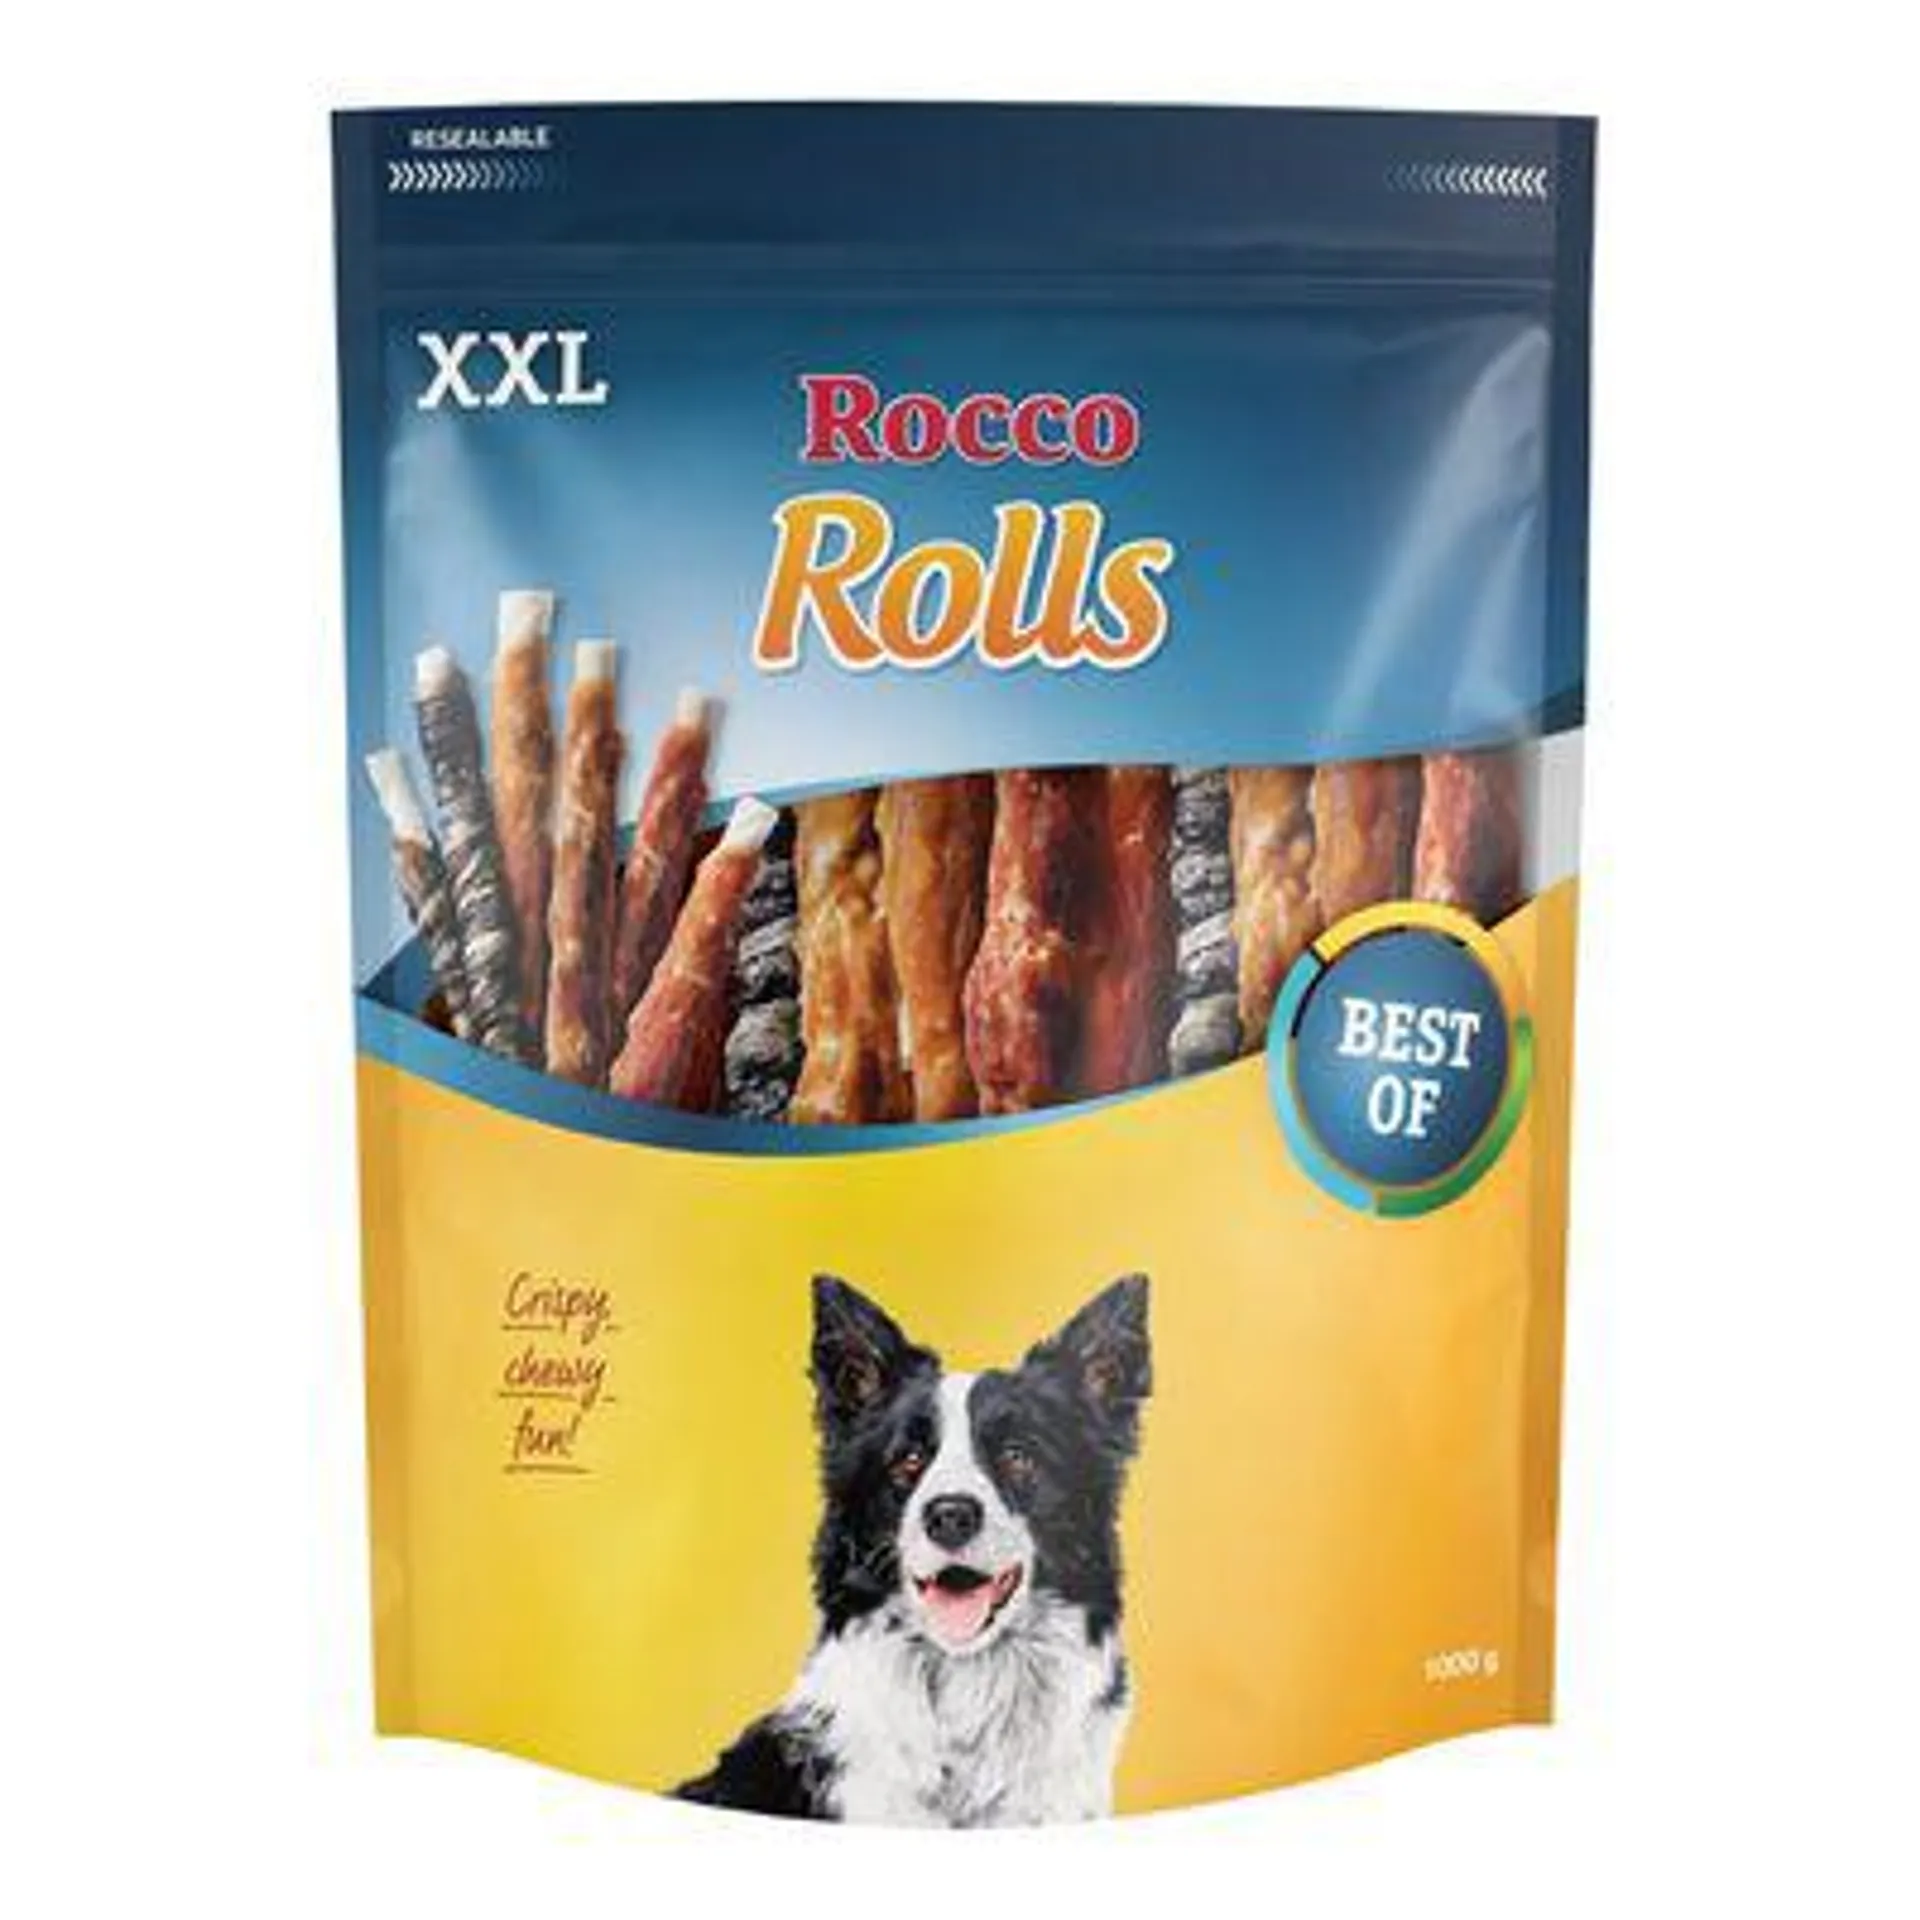 Rocco Rolls - Pack XXL